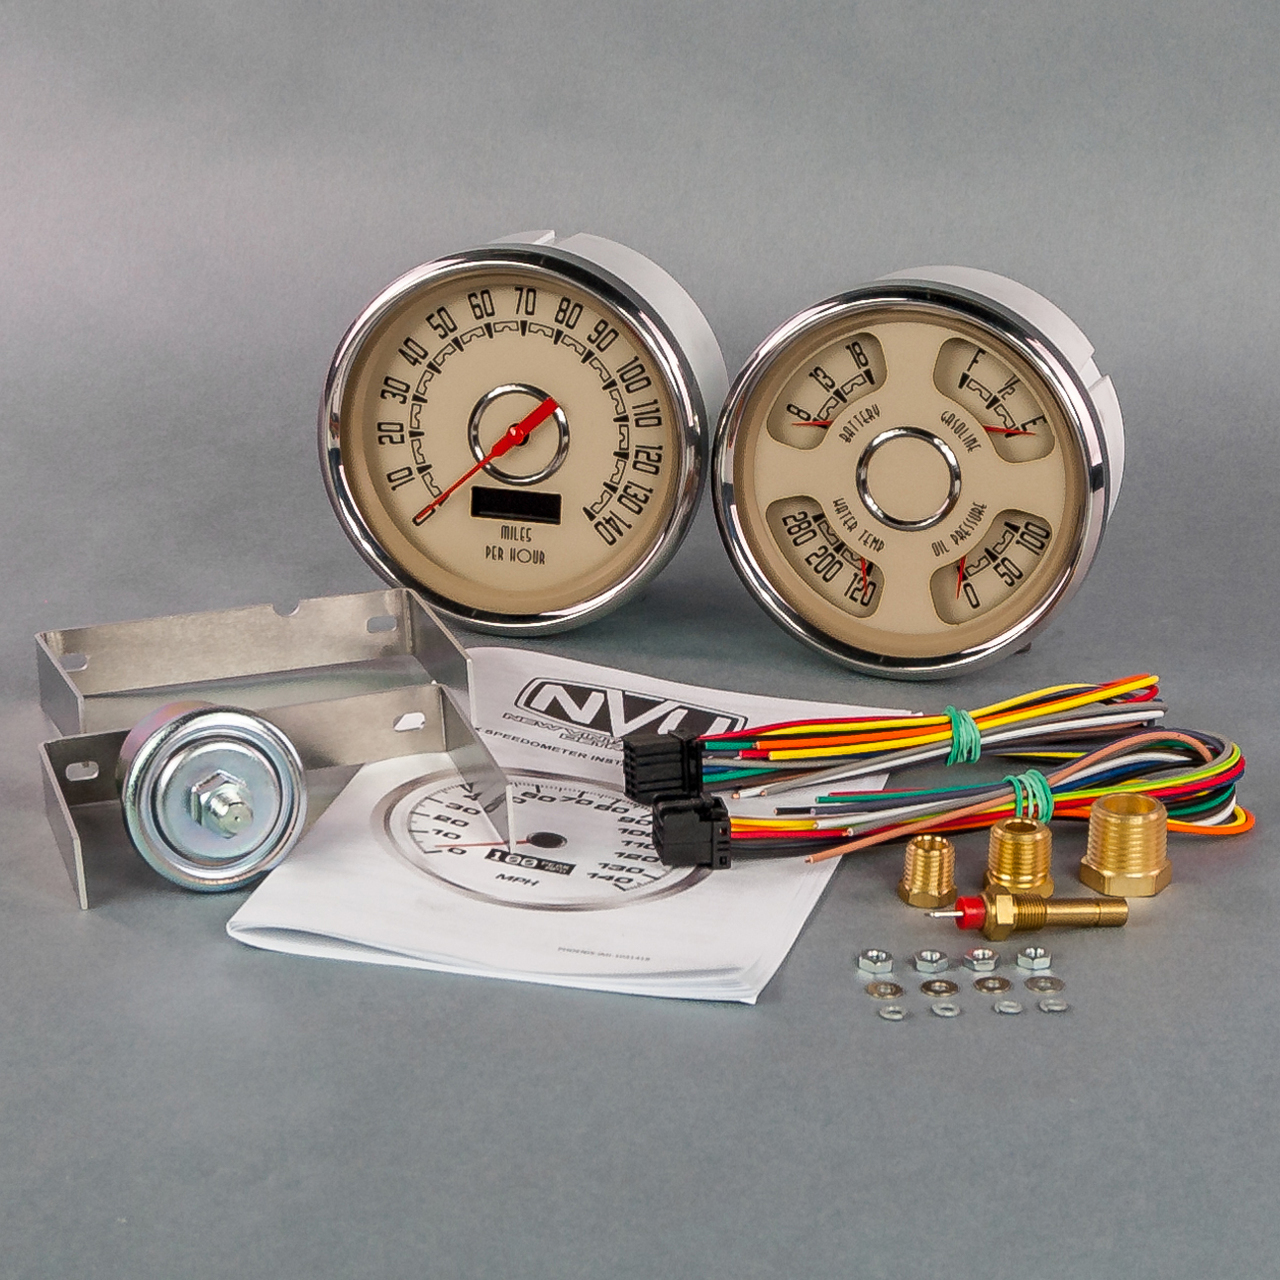 New Vintage 37205-02 Gauge Kit, Woodward, Analog, Fuel Level / Oil Pressure / Speedometer / Voltmeter / Water Temperature, Beige Face, Kit